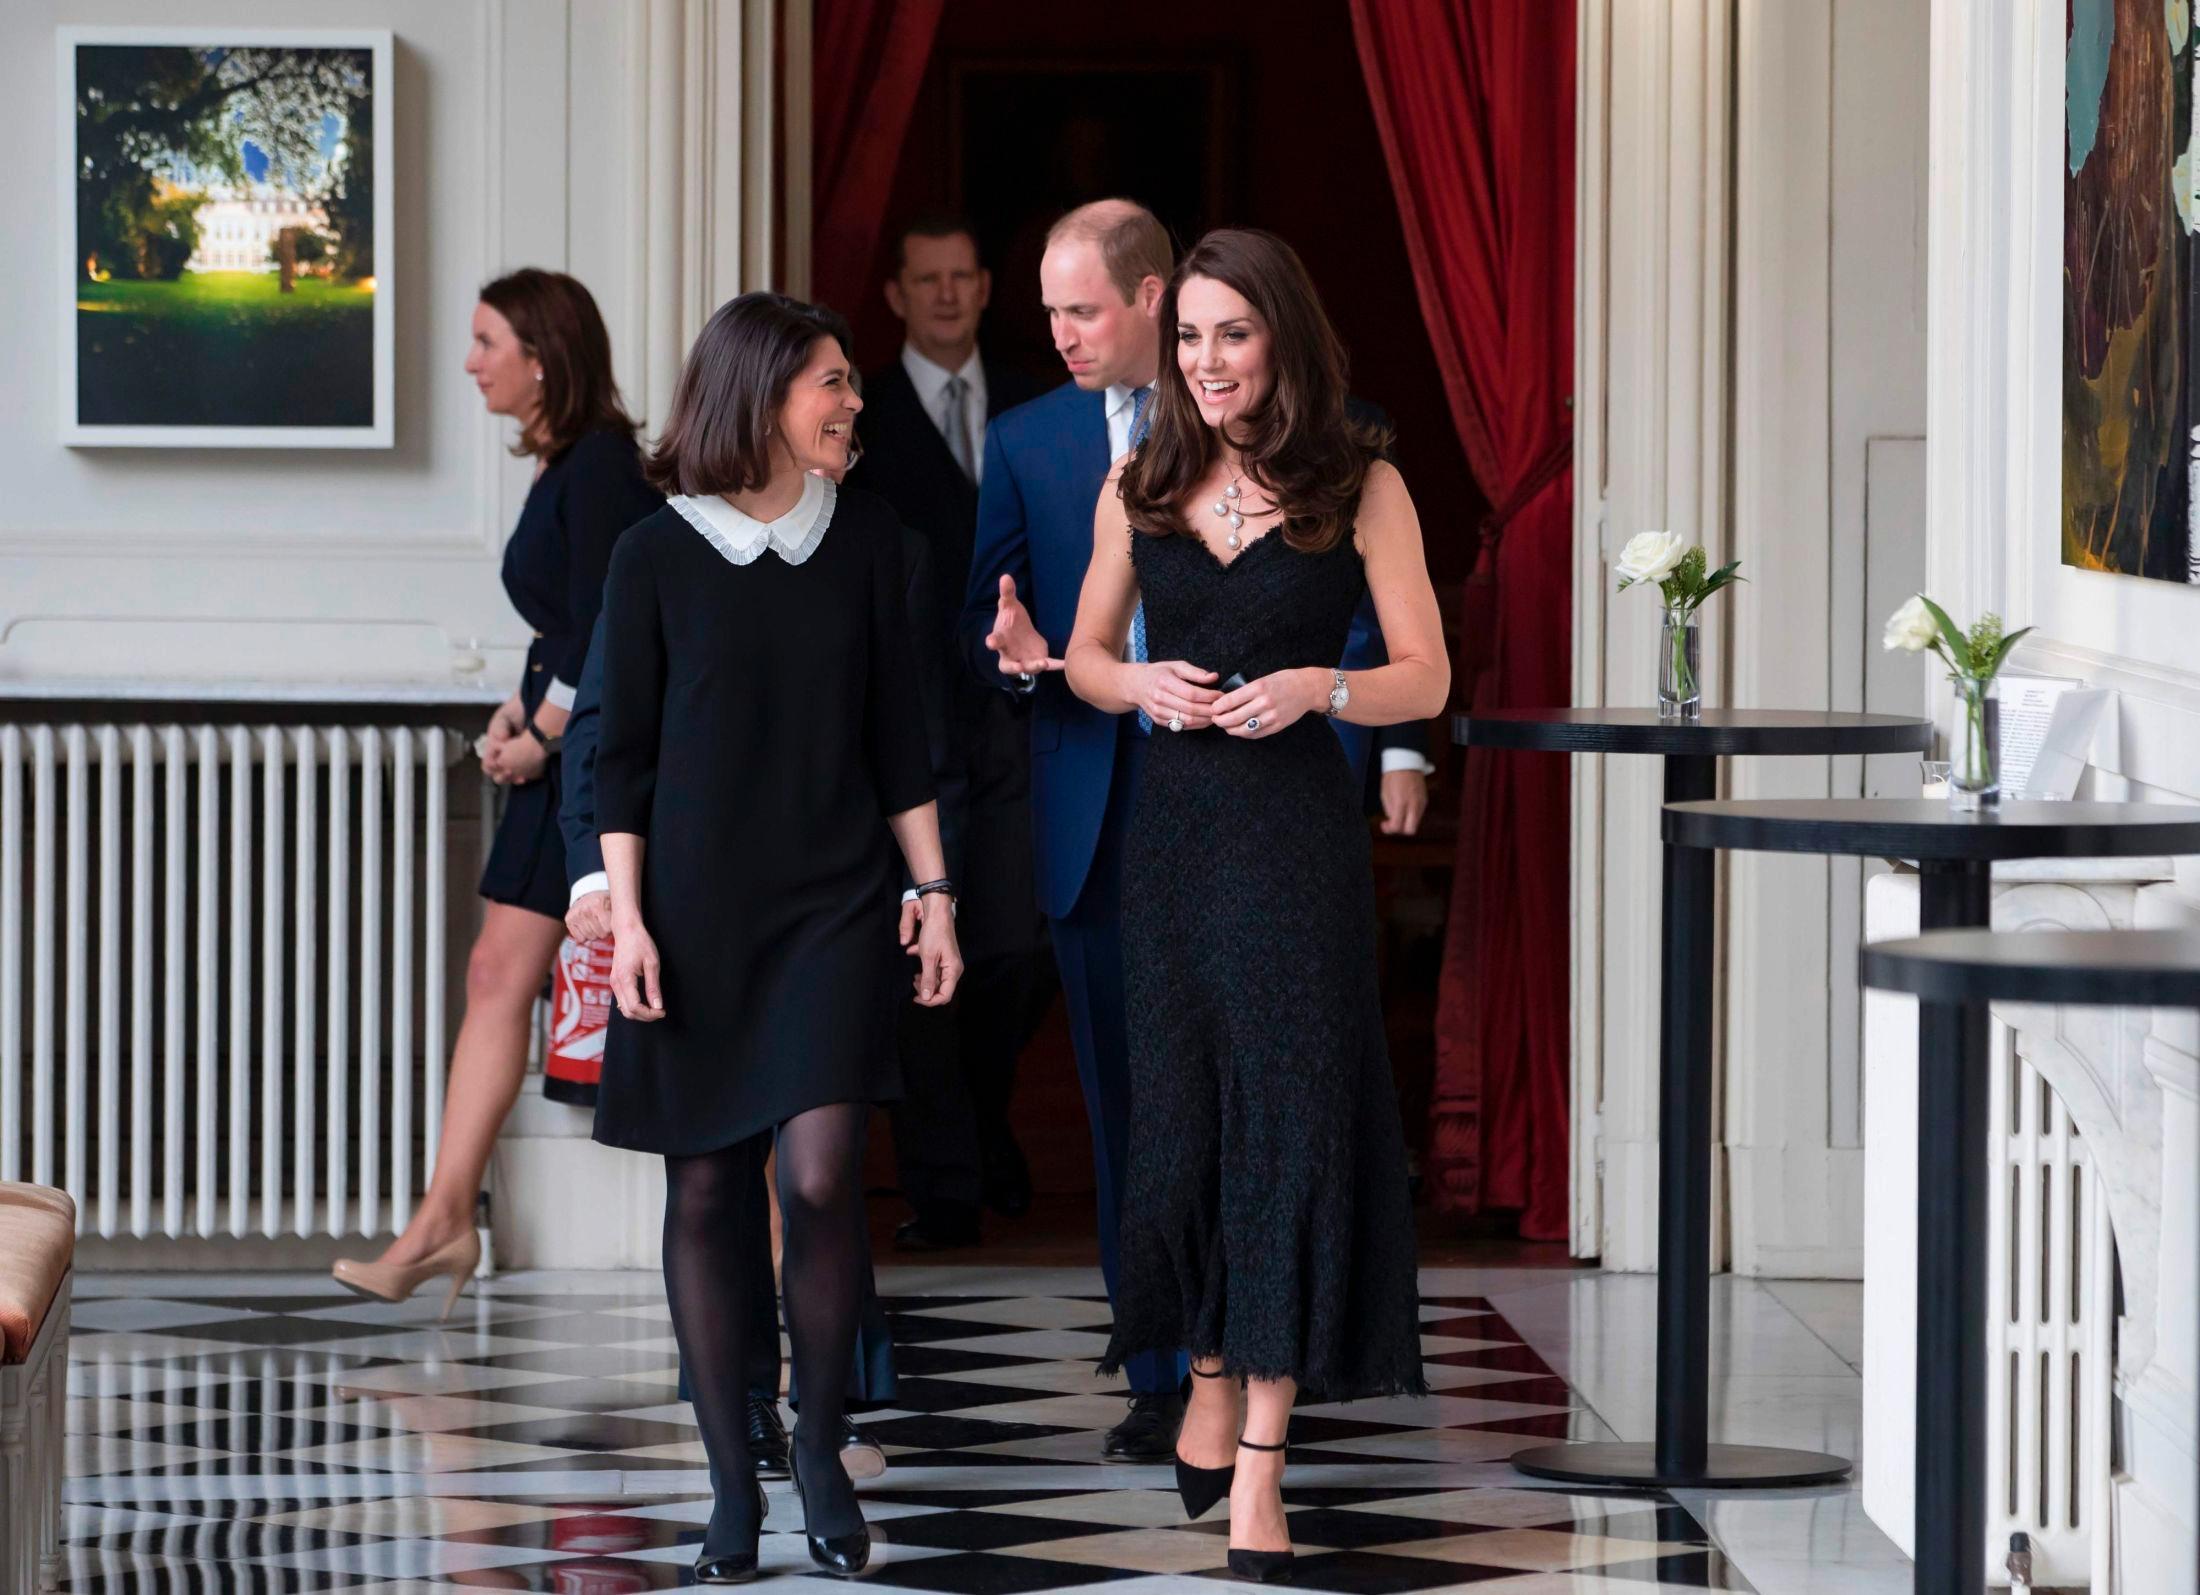 FRANSK VISITT: Prins William og hertuginne Kate besøkte den britiske ambassadøren Lord Ed Llewellyn (ikke med på bildet) og hans kone Anne Llewellyn. Foto: AFP